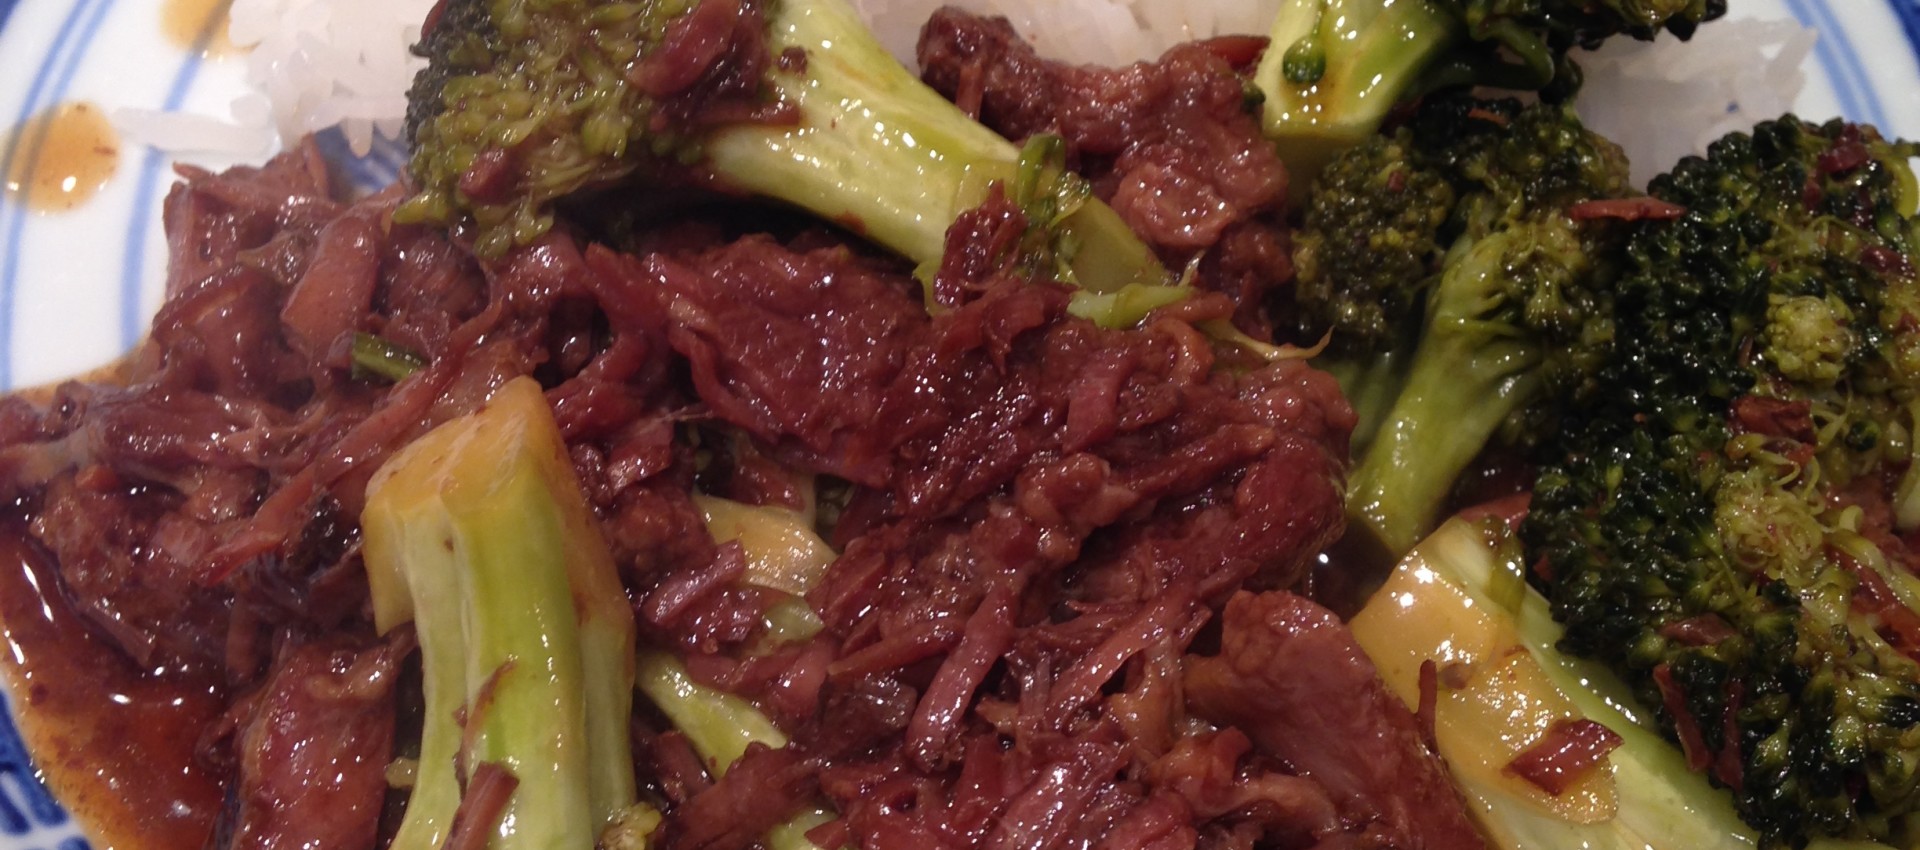 Beef & Broccoli in a Crockpot